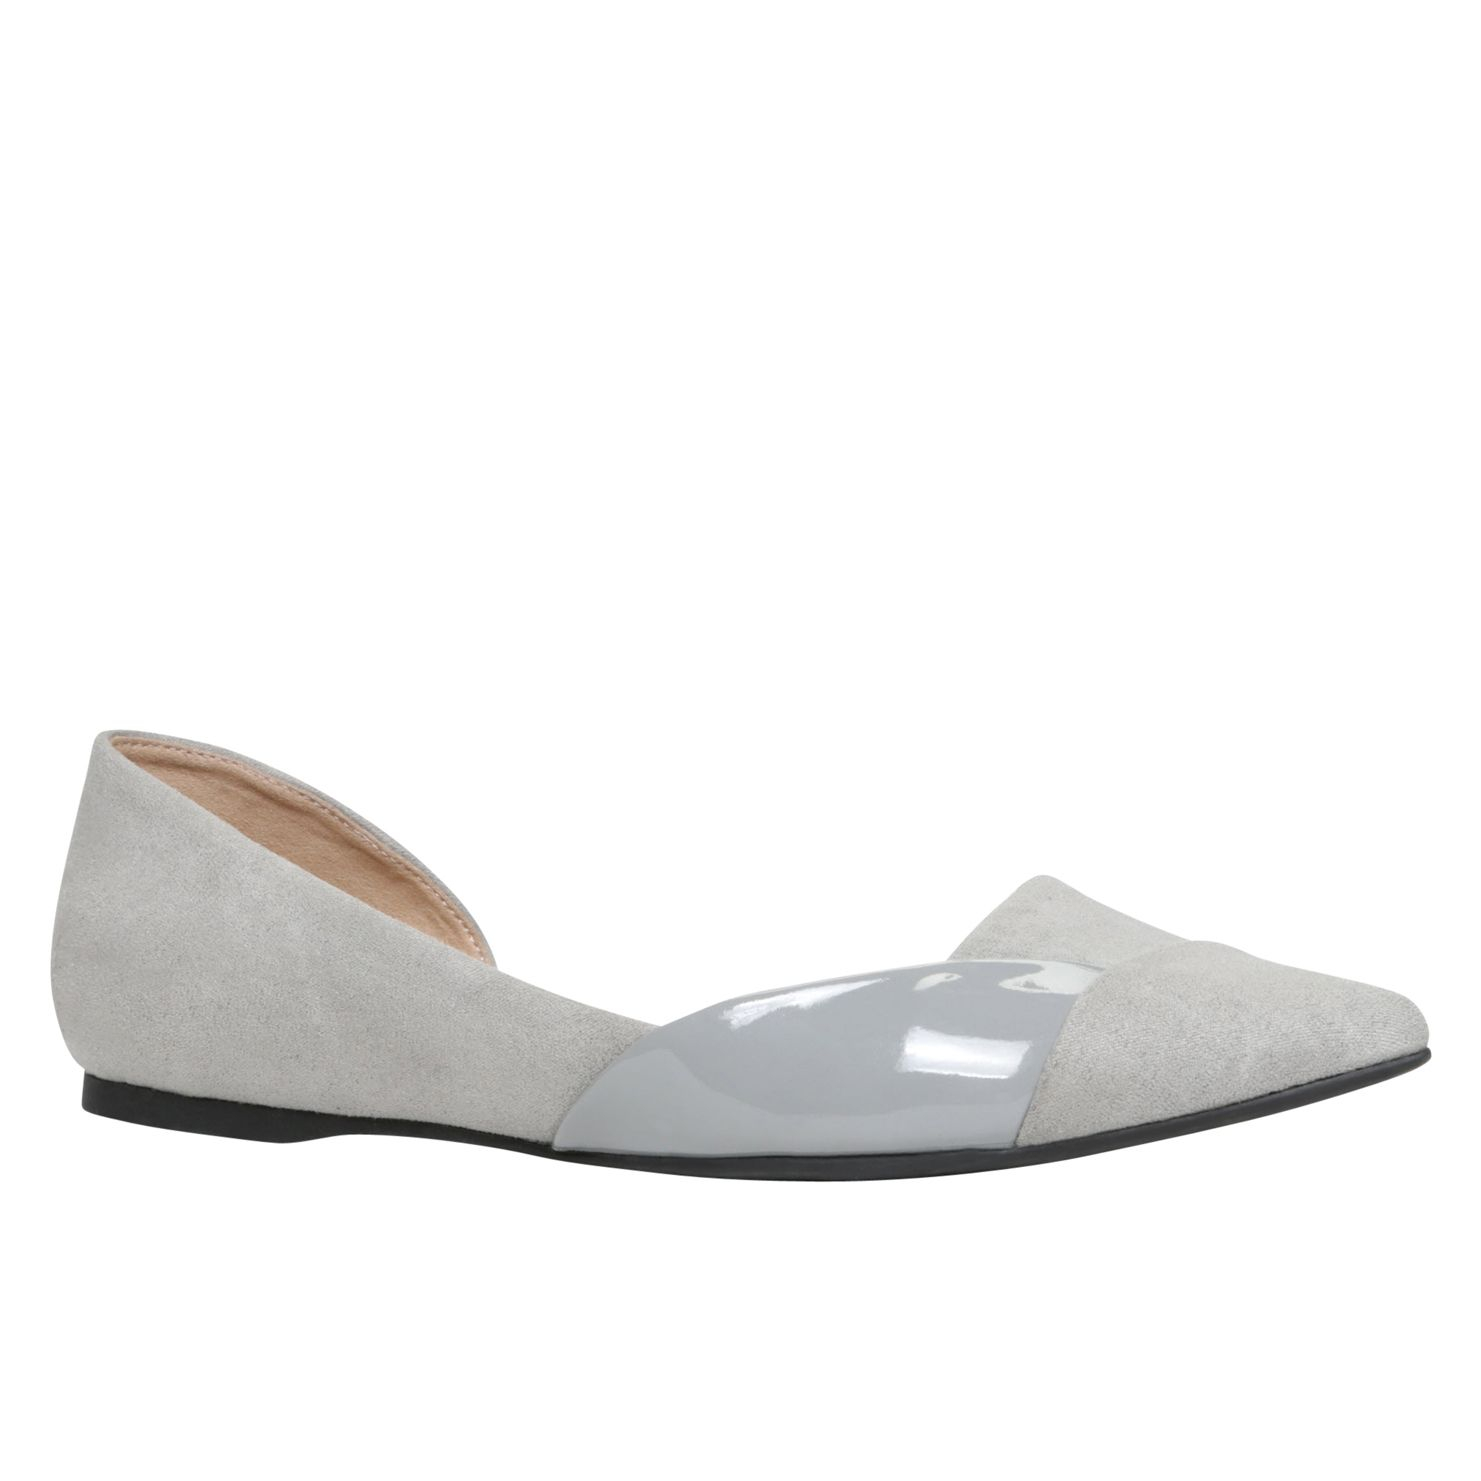 Aldo Zaci Pointed Toe Ballerina Shoes in Gray (Grey) | Lyst